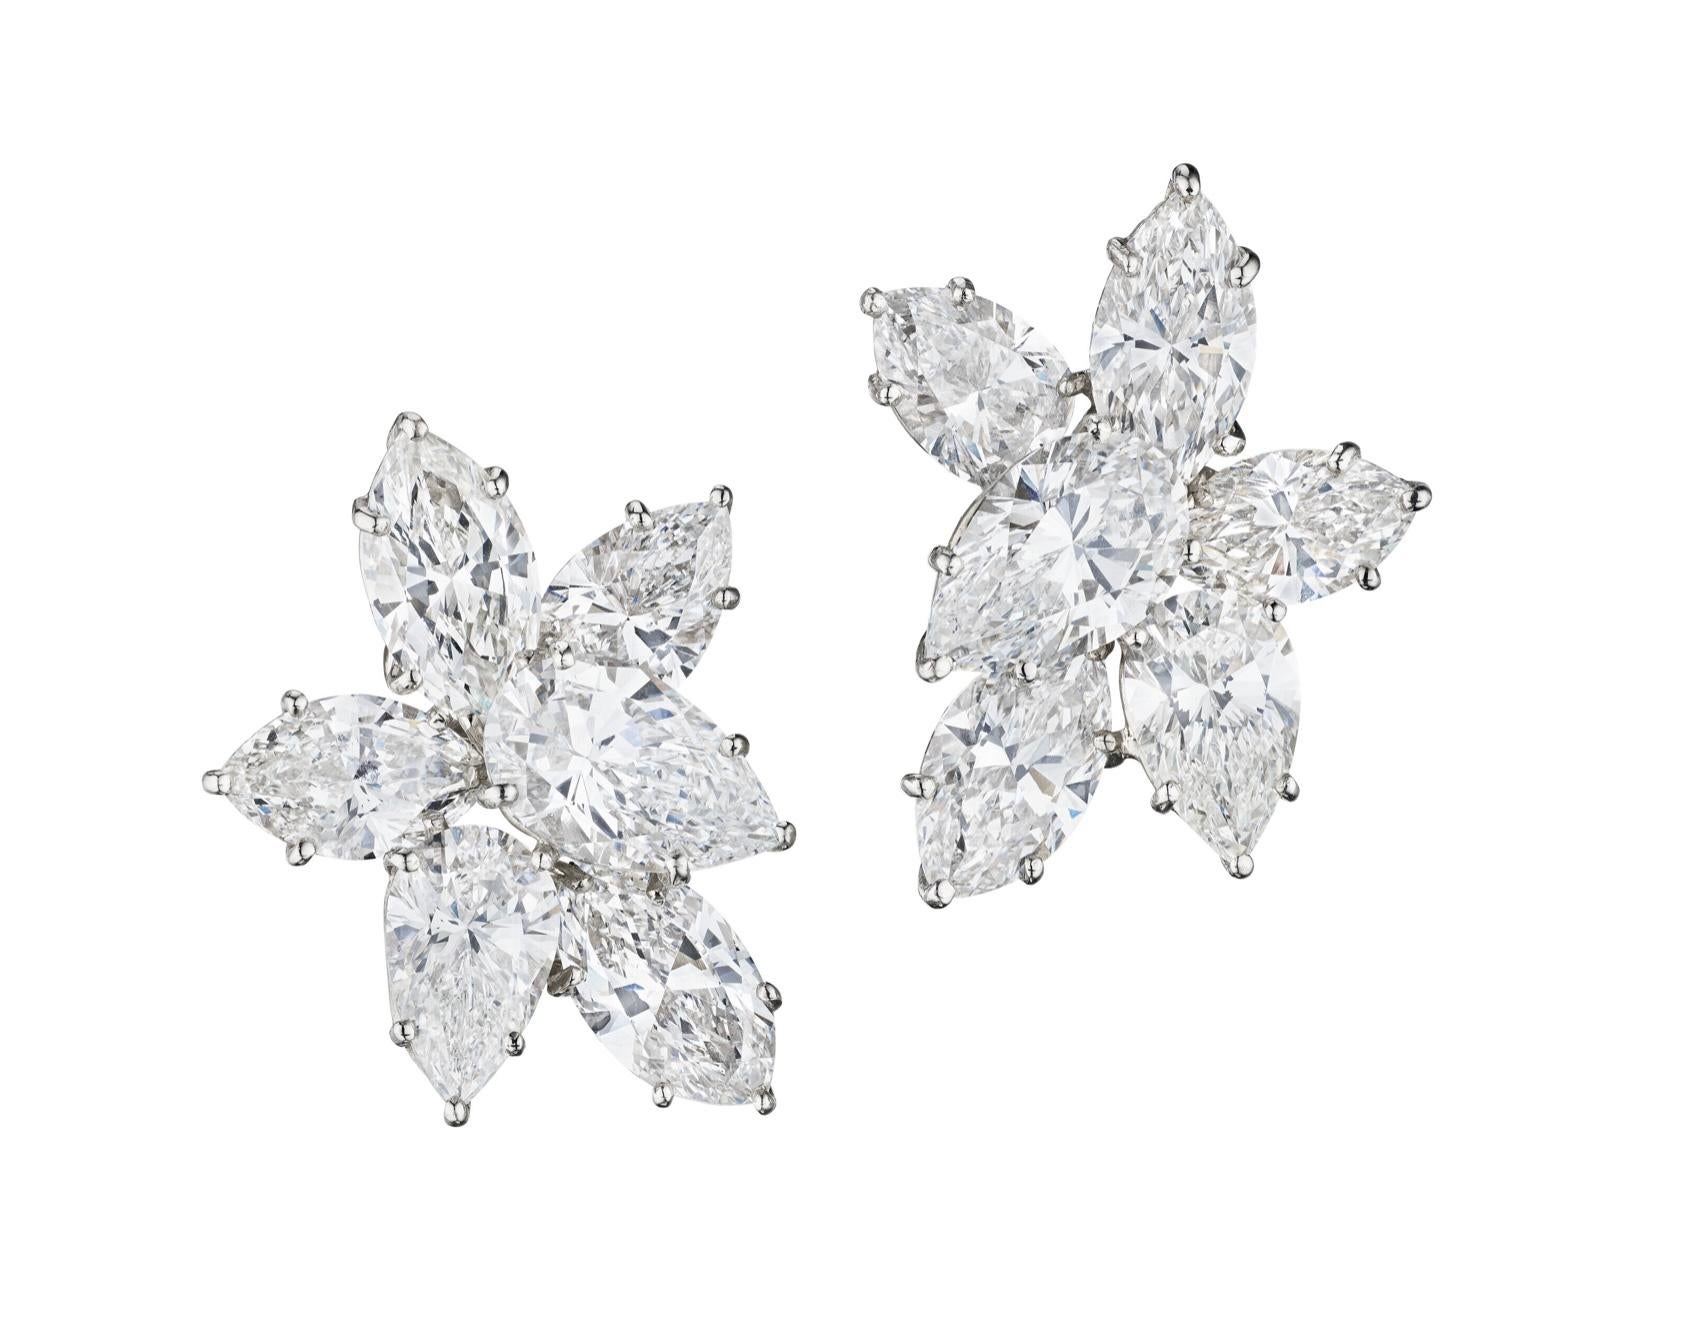 Harry Winston Diamond Cluster Earrings. For Sale at 1stDibs